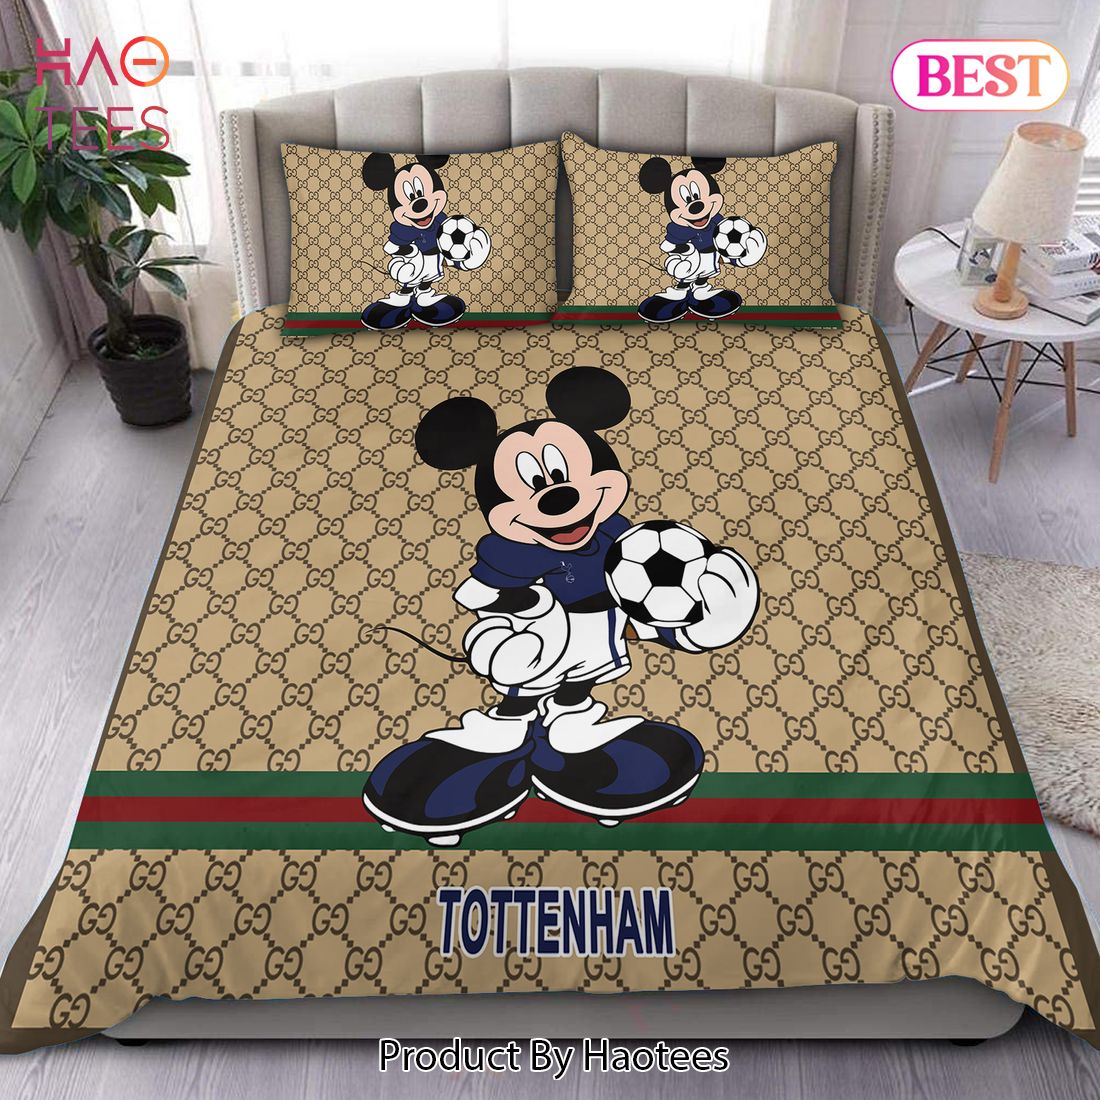 Tottenham Gucci Mickey Bedding Set Duvet Cover Bedroom Sets Luxury Brand Bedding New Fashion